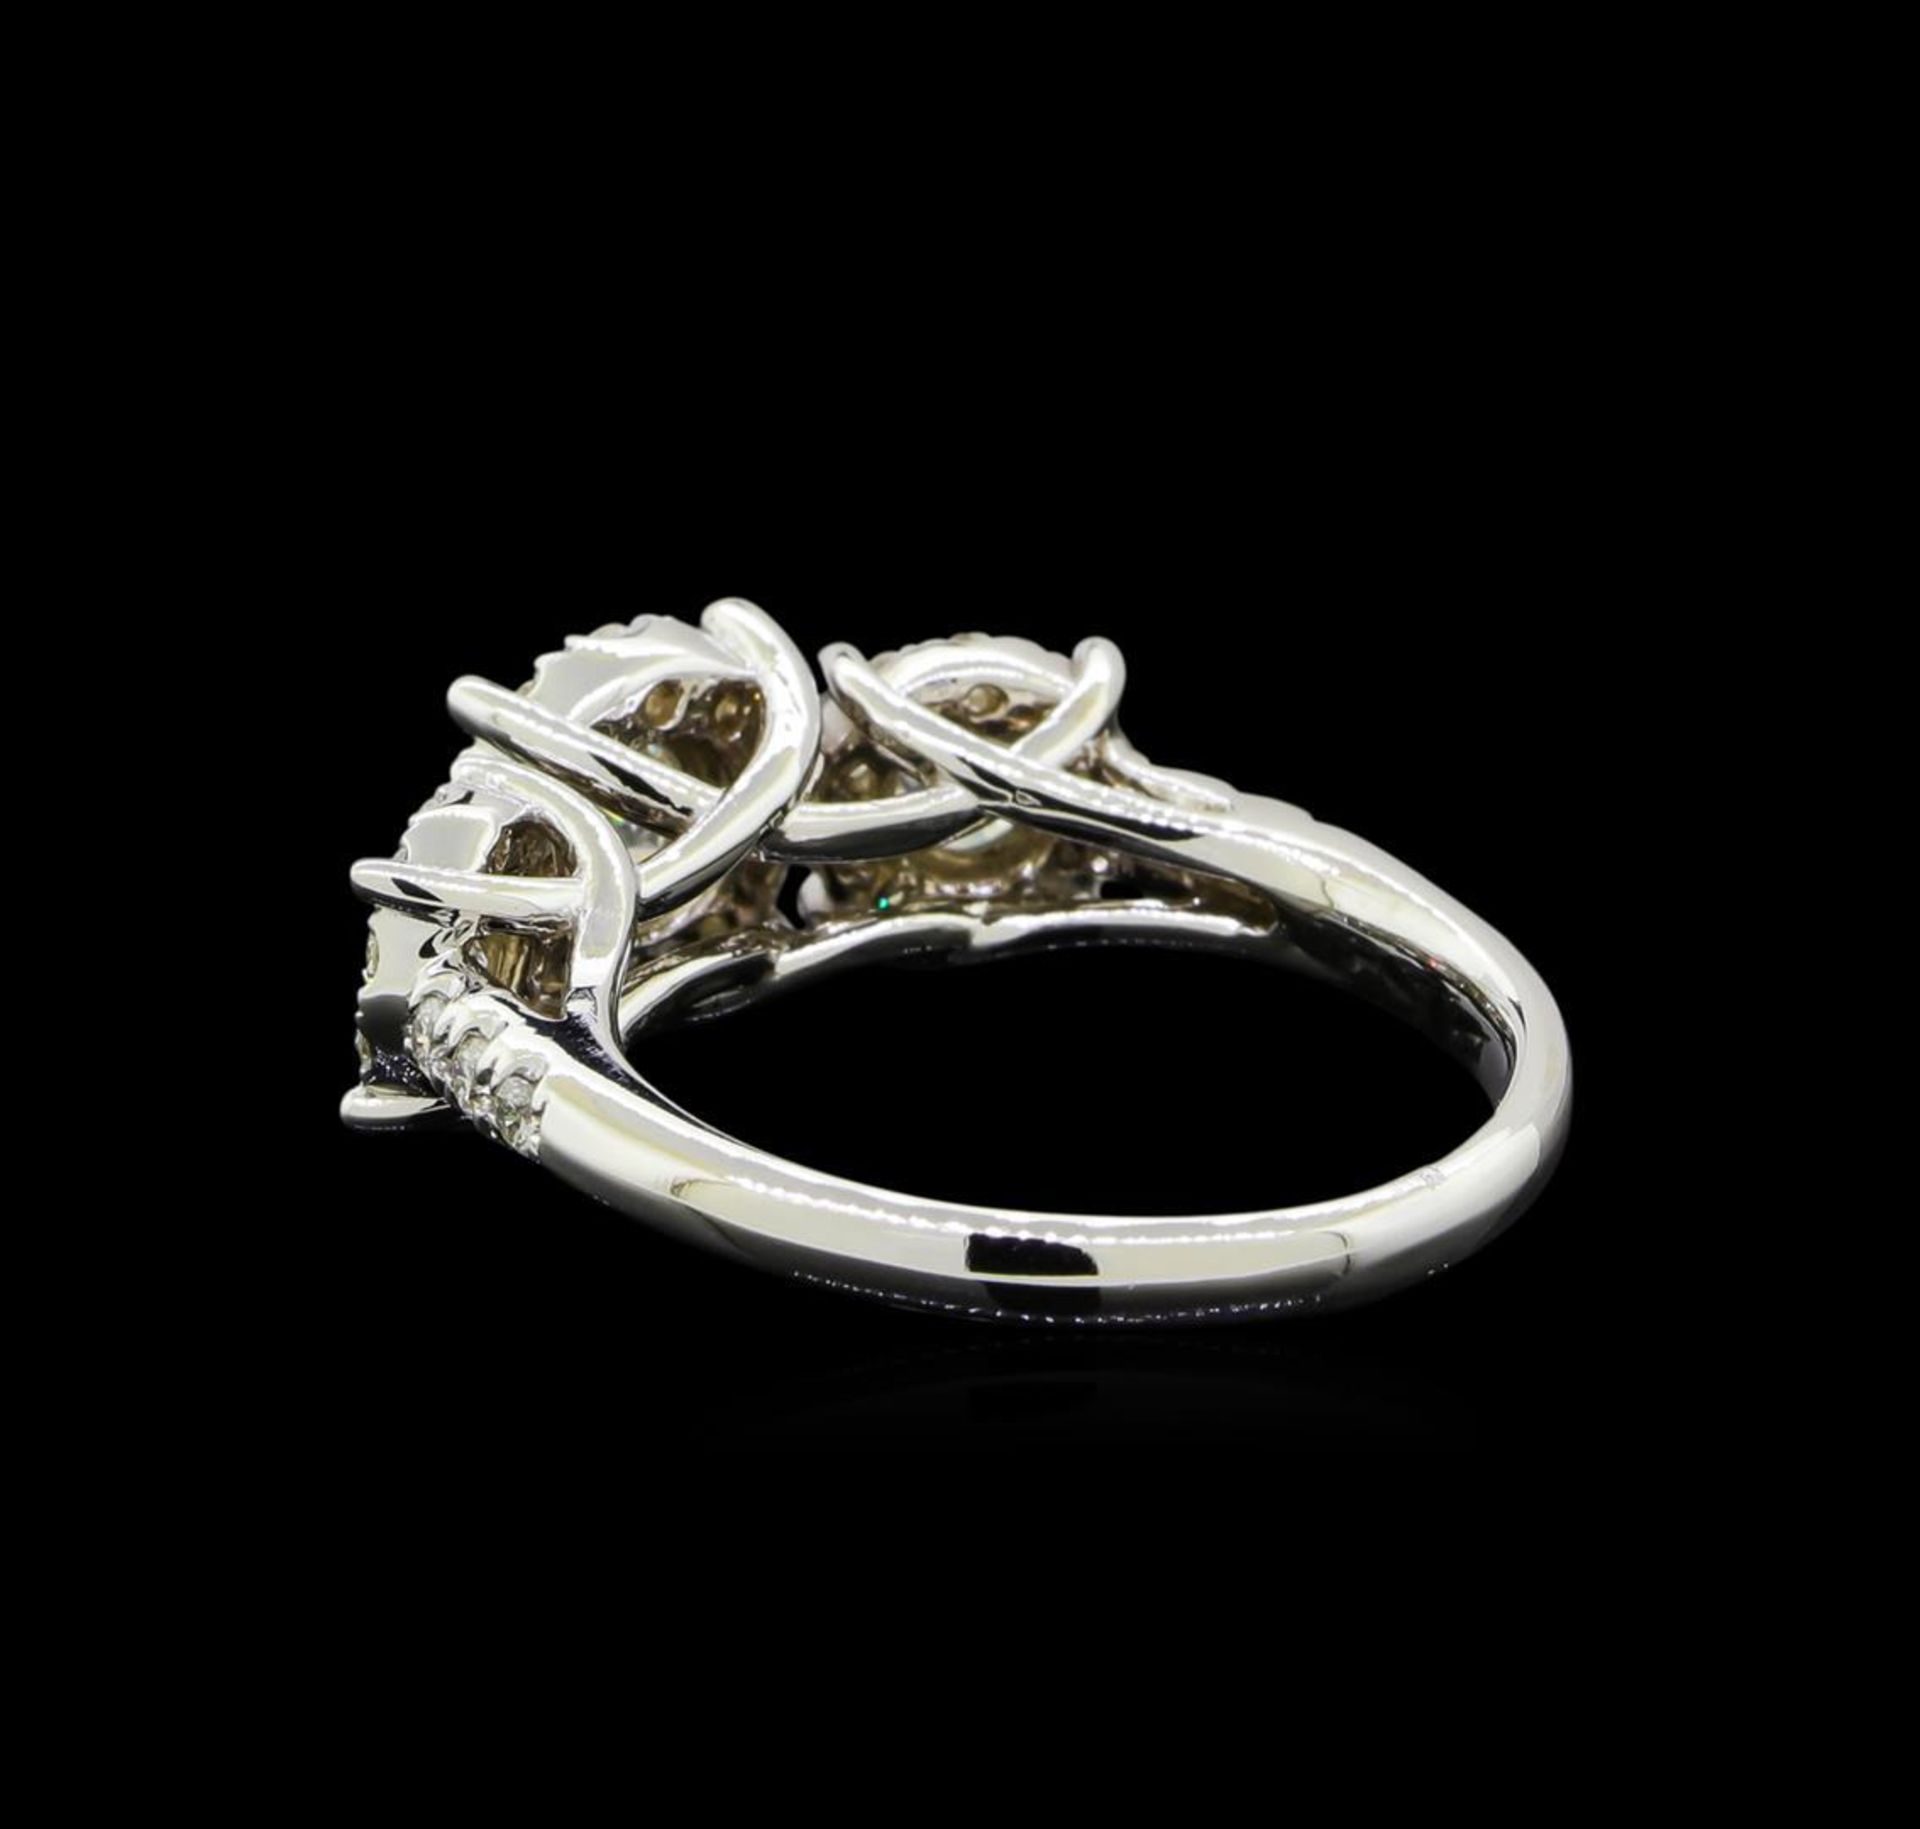 1.54 ctw Diamond Ring - 14KT White Gold - Image 3 of 5